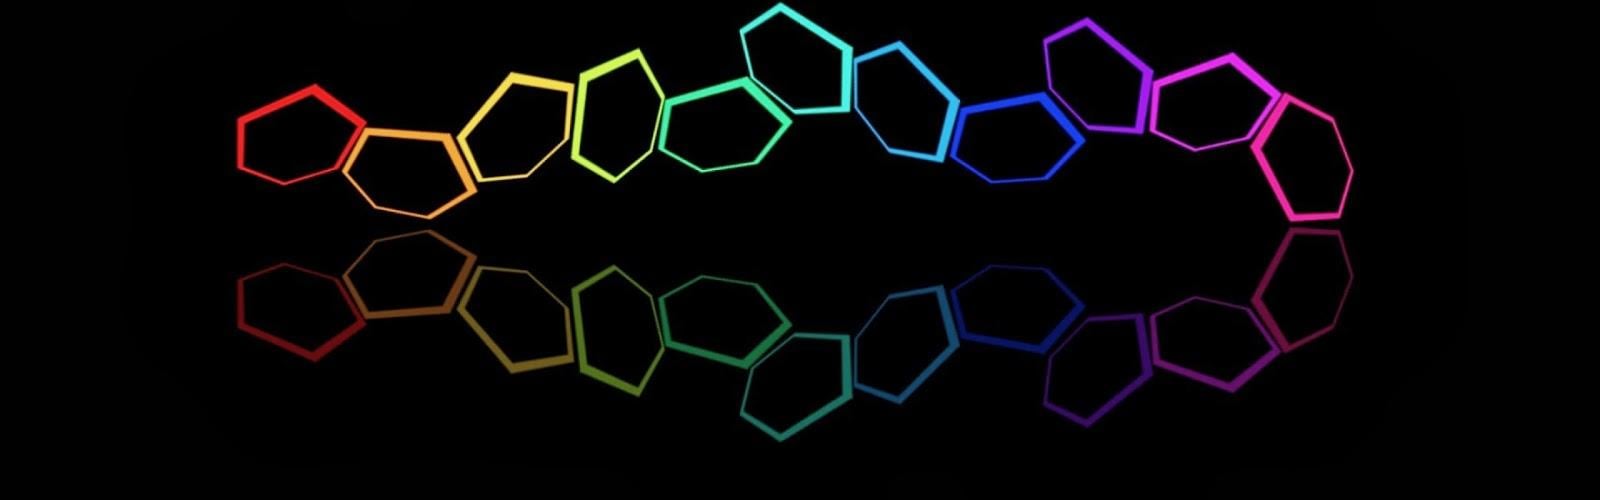 Dual Widescreen Wallpaper: Rainbow Octagons